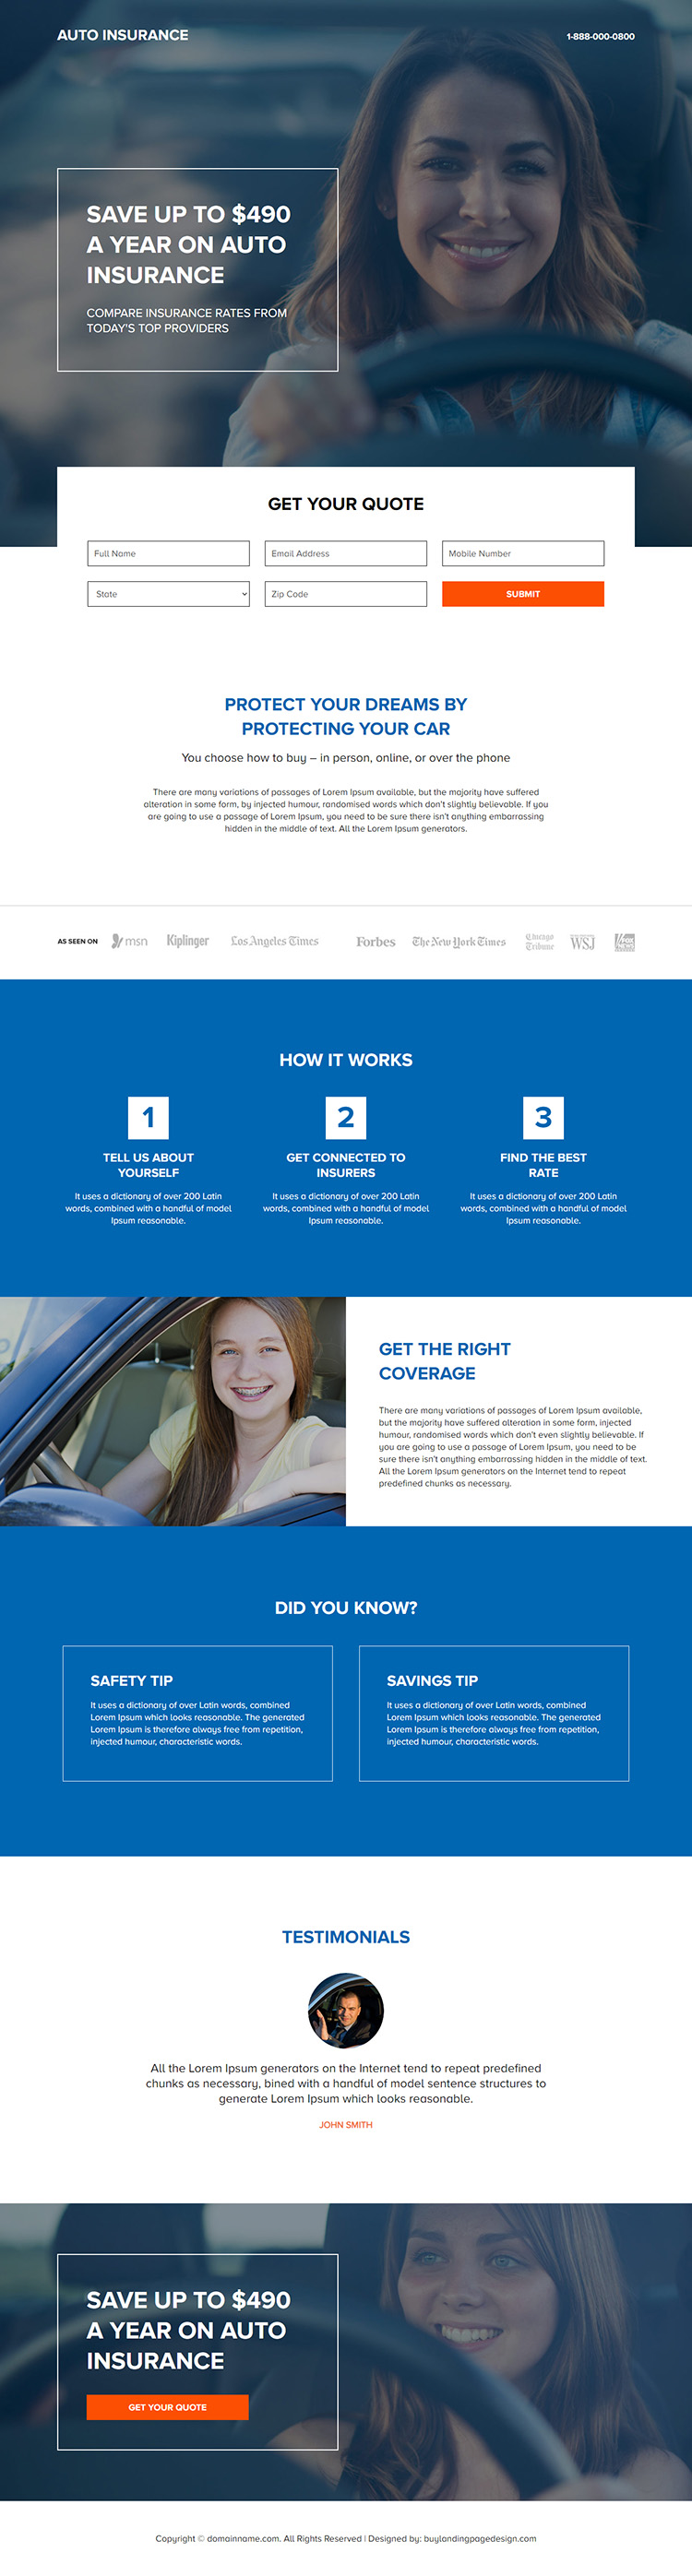 auto insurance companies responsive landing page design